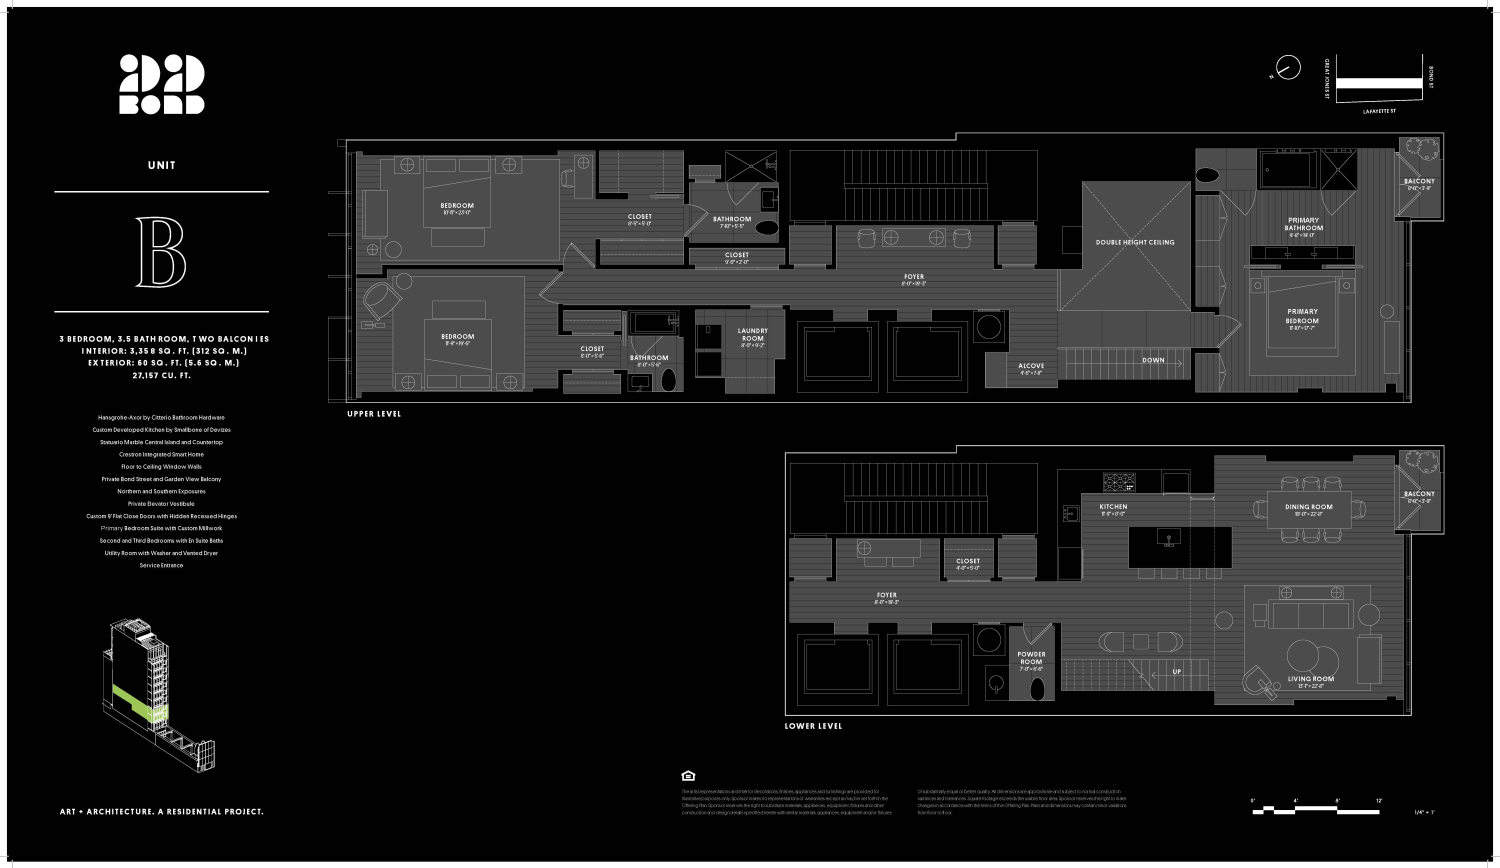 Floorplan for 22 Bond Street, 3/4